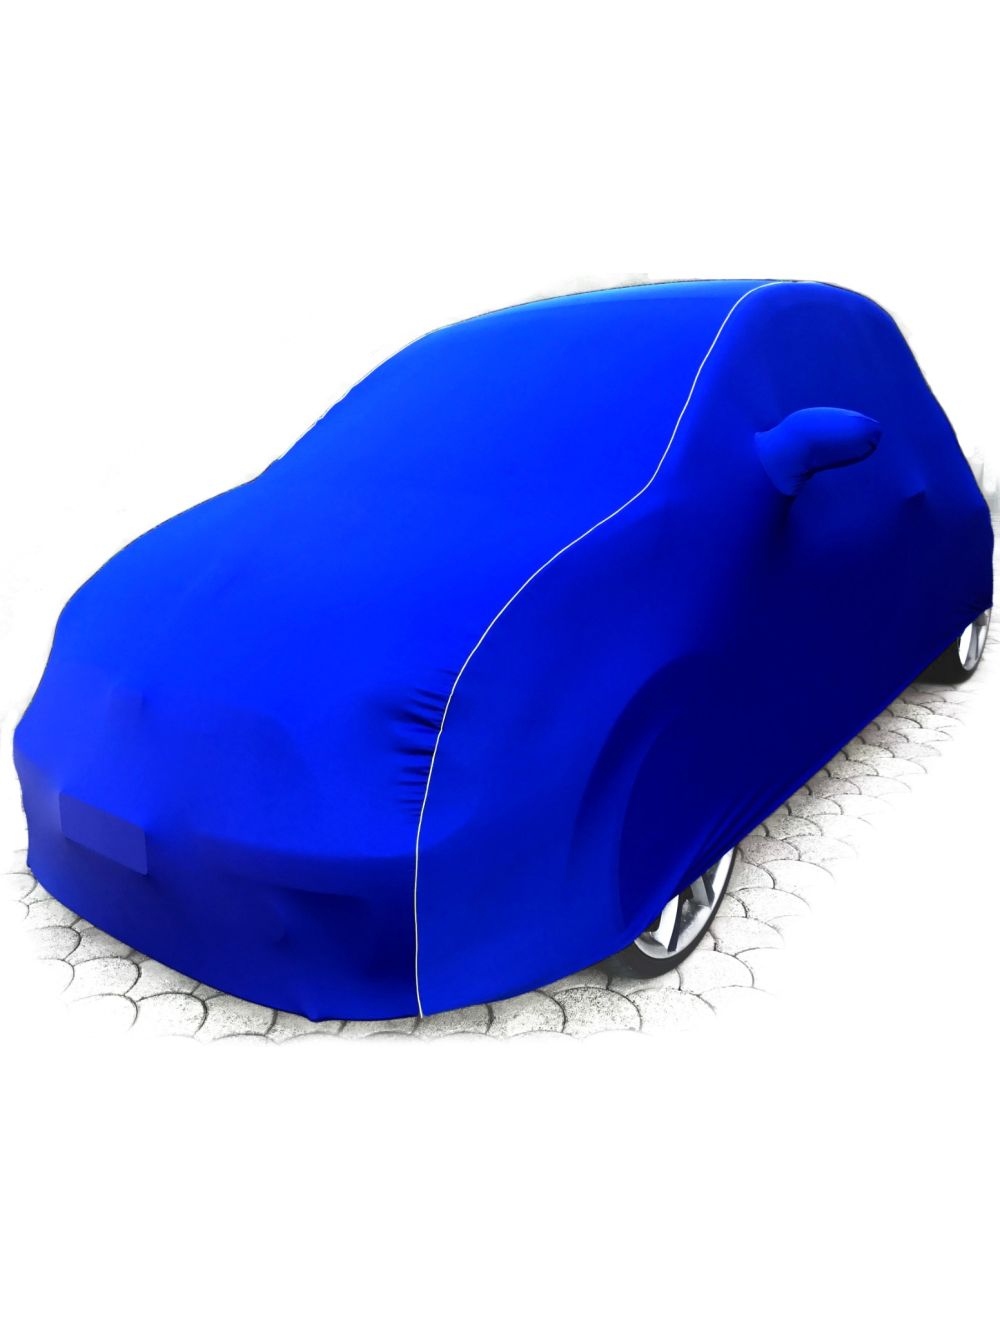 Custom made car cover for Abarth - Indoor Platinum Range